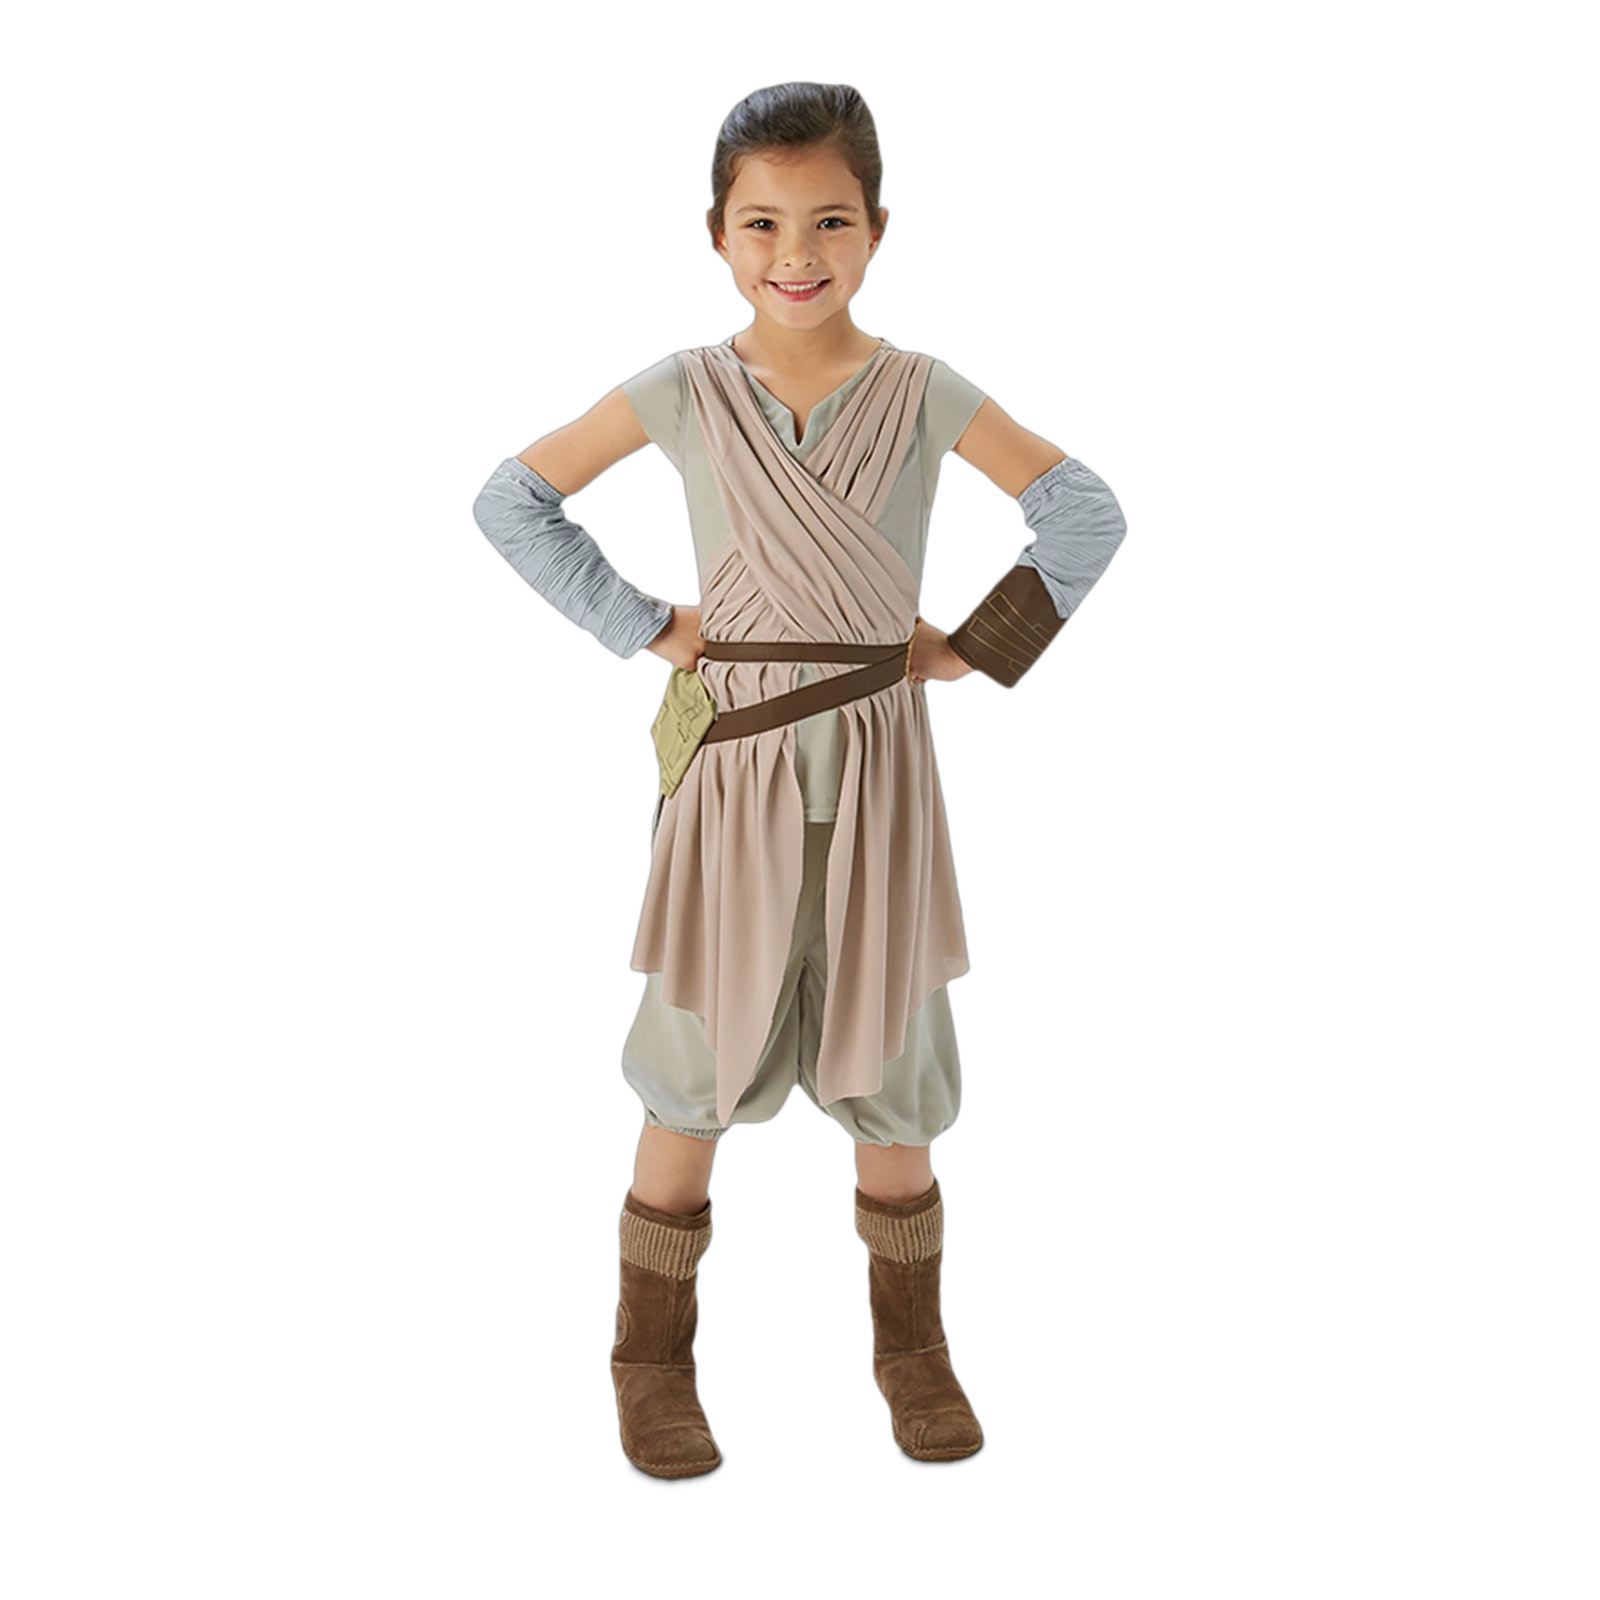 Star Wars - Rey Costume for Kids